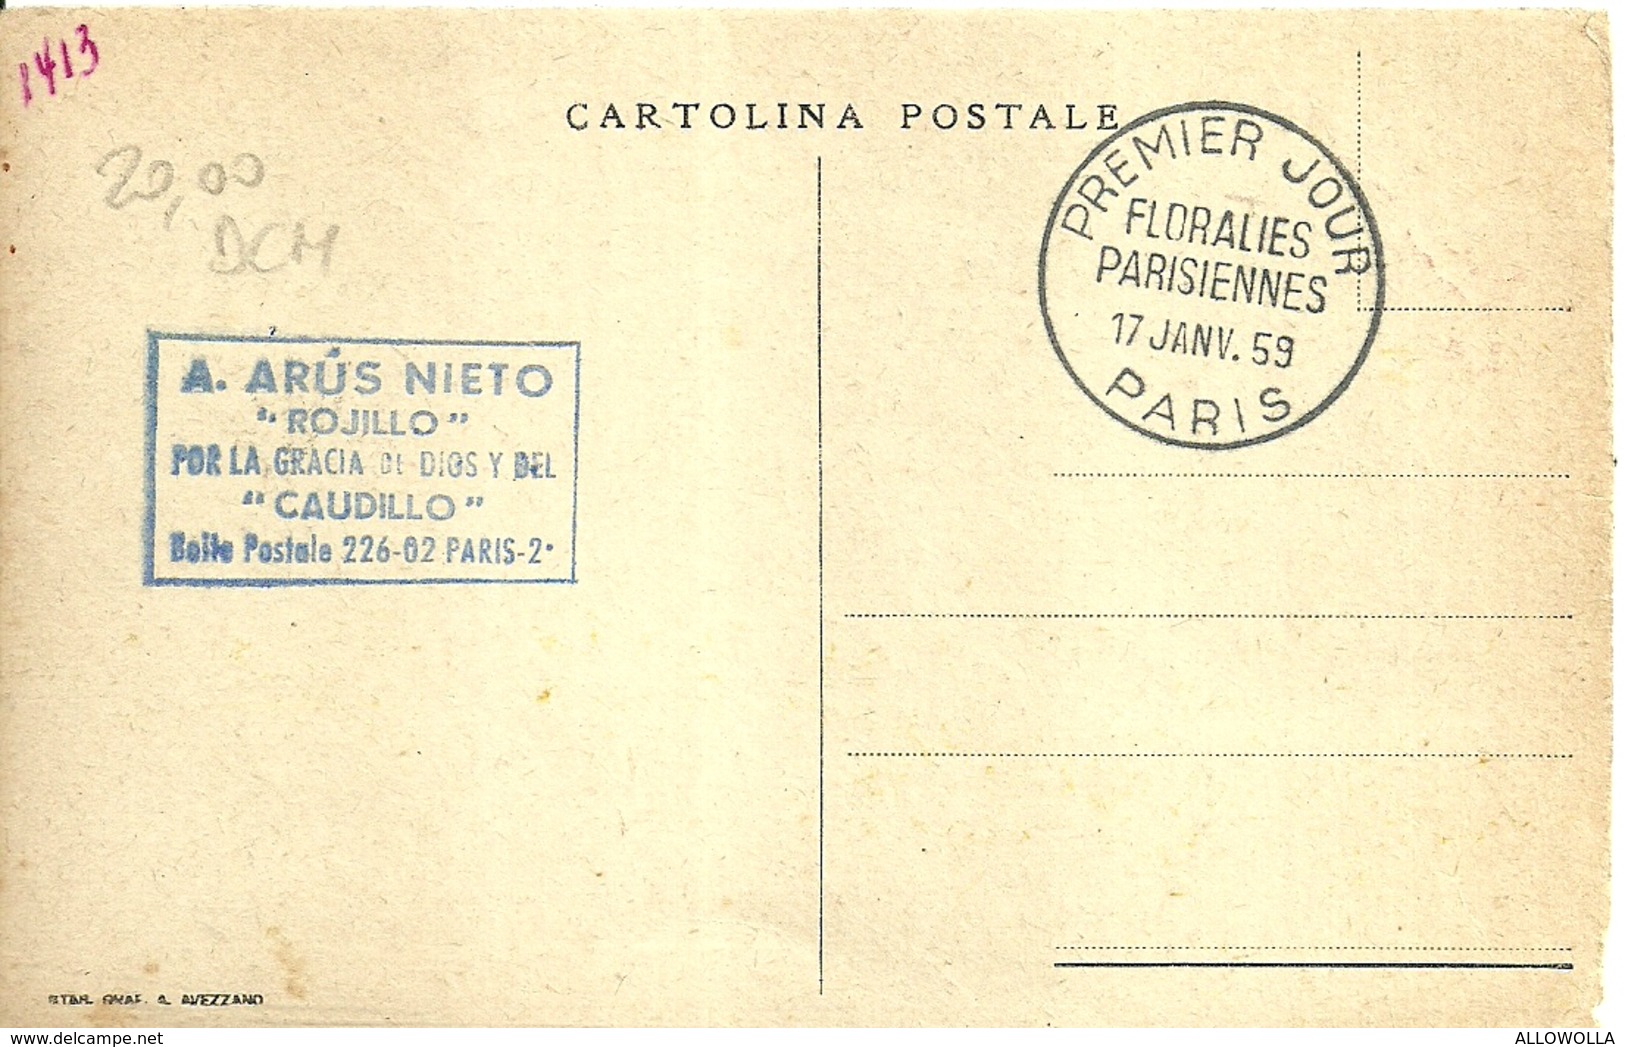 1098 " PREMIER JOUR FLORALIES PARISIENNES 17 JANV. '59-CART. TORINO 1928 " CARTOLINA POSTALE ORIGINALE SPEDITA - Demonstrations